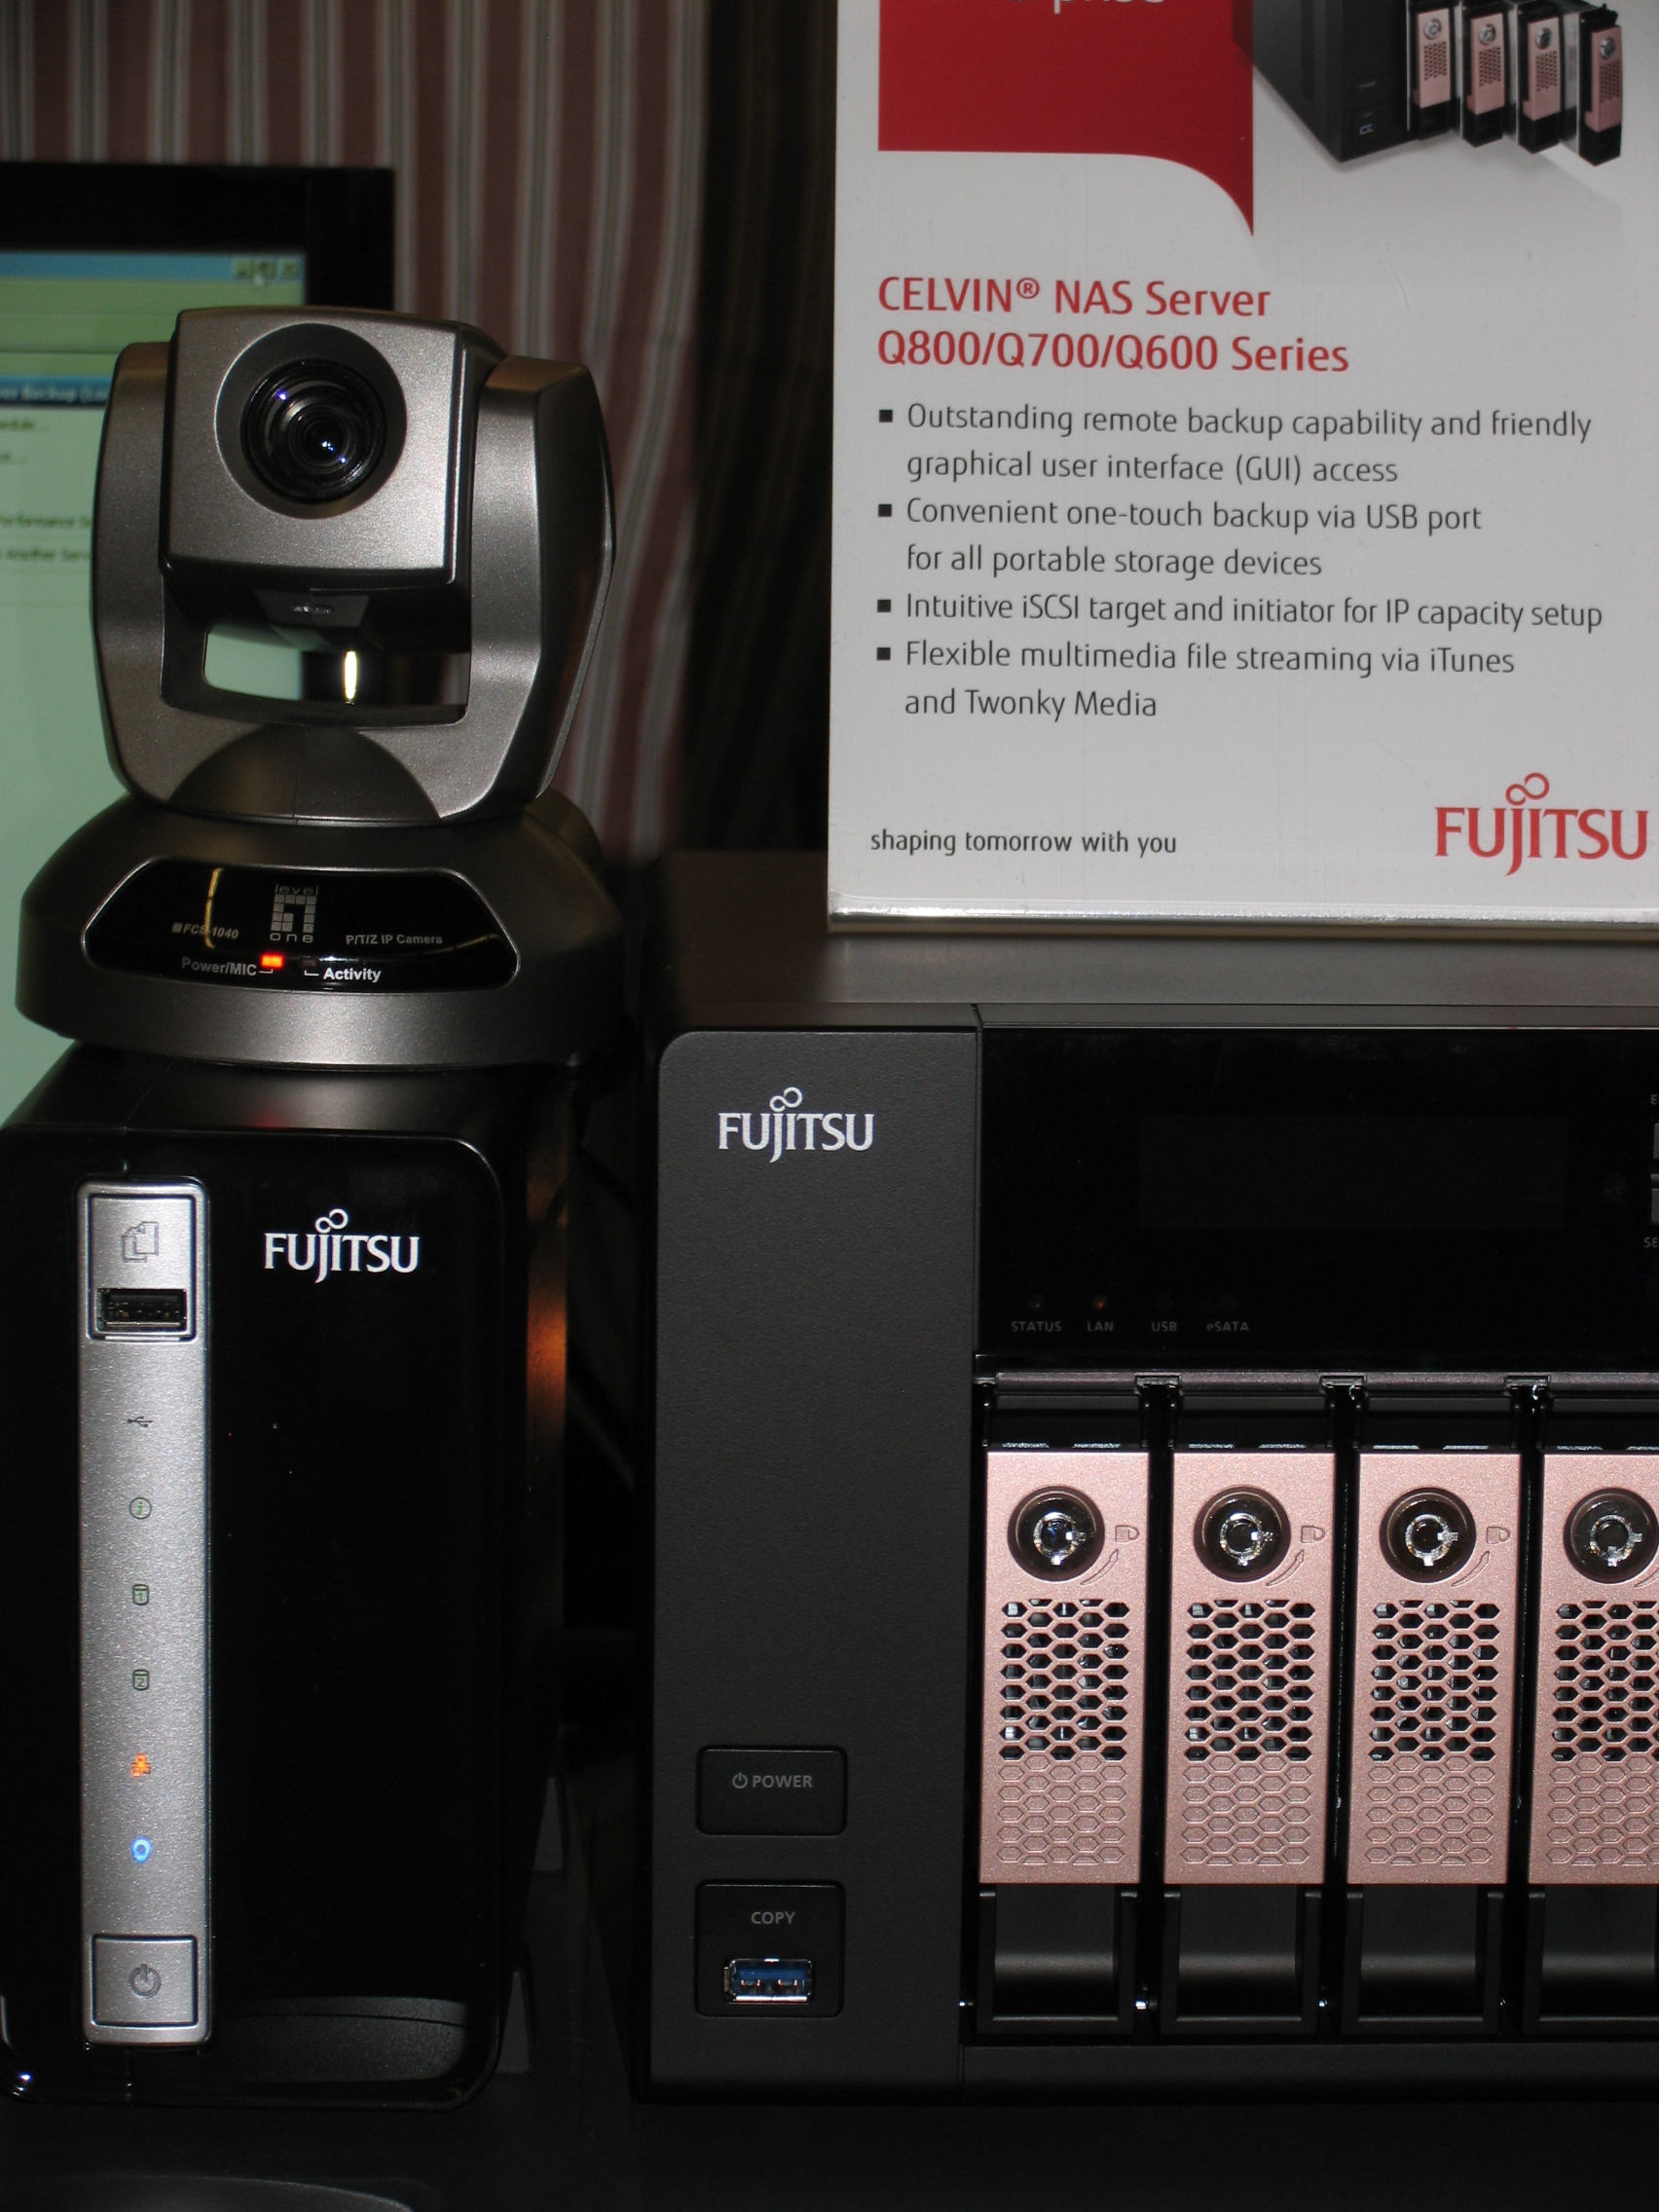 Fujitsu: Visit 2010